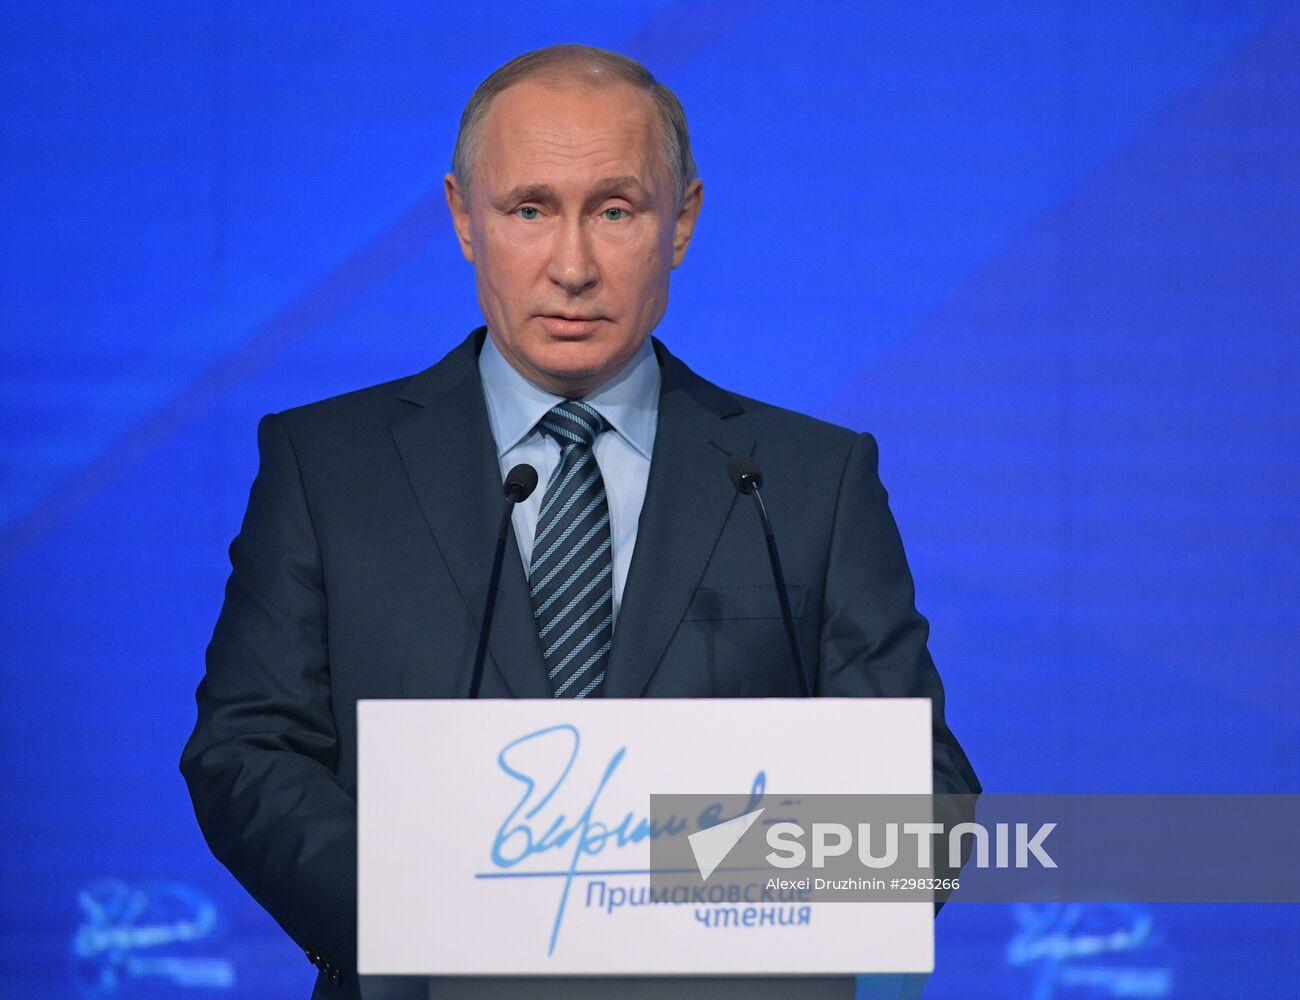 President Vladimir Putin takes part in Primakov Readings International Forum